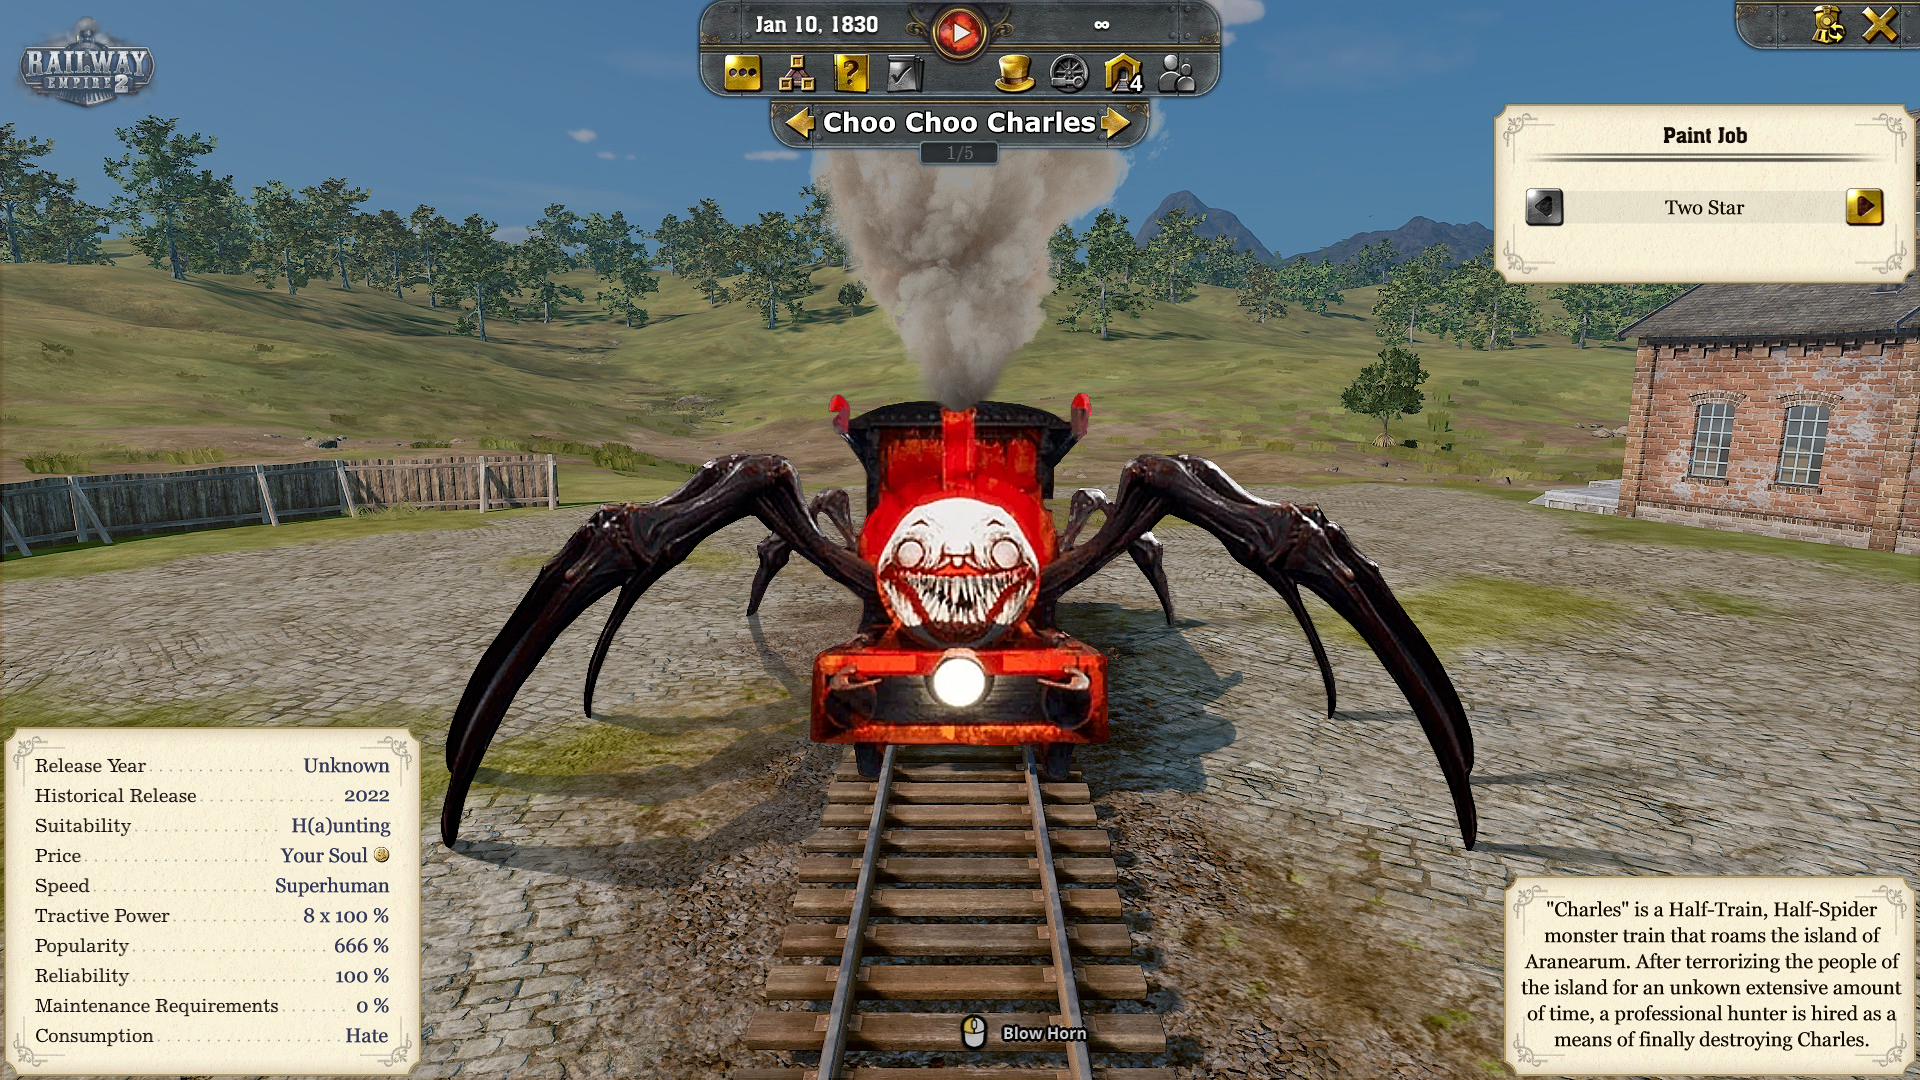 Creepy spider train game Choo-Choo Charles brings PlayStation aboard